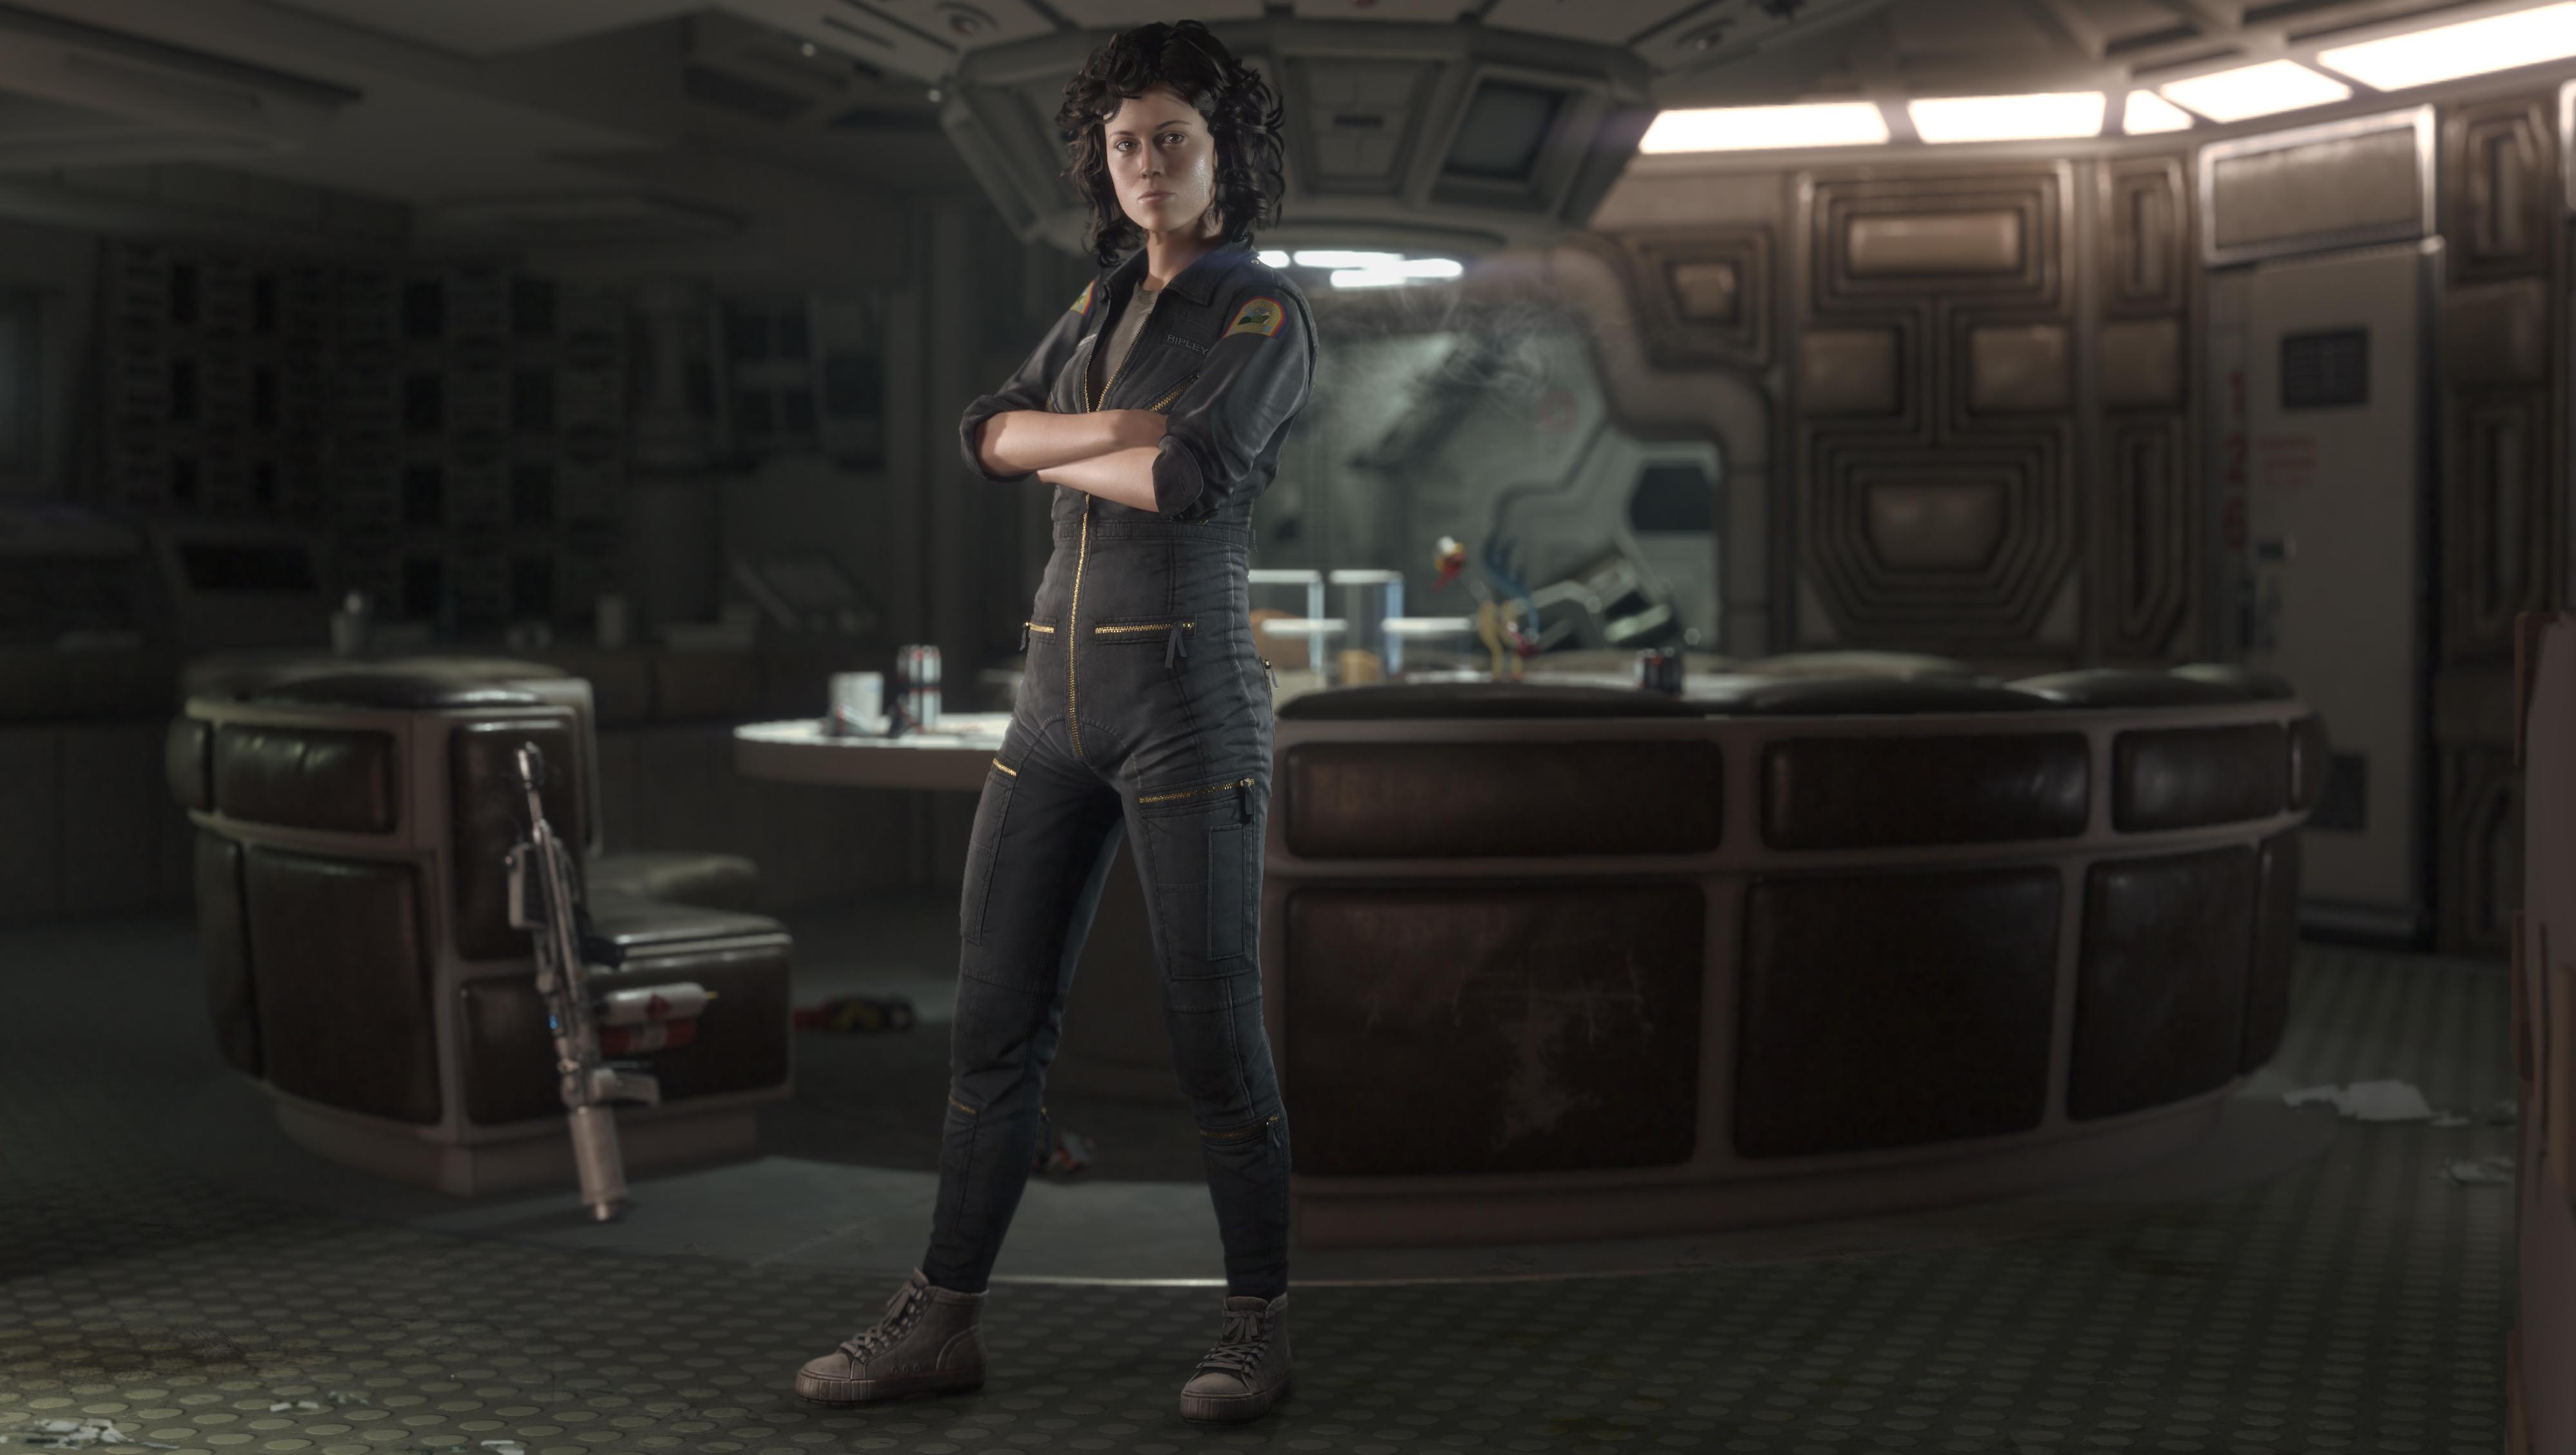 Ellen Ripley from the original Alien movie in the Alien Isolation DLC